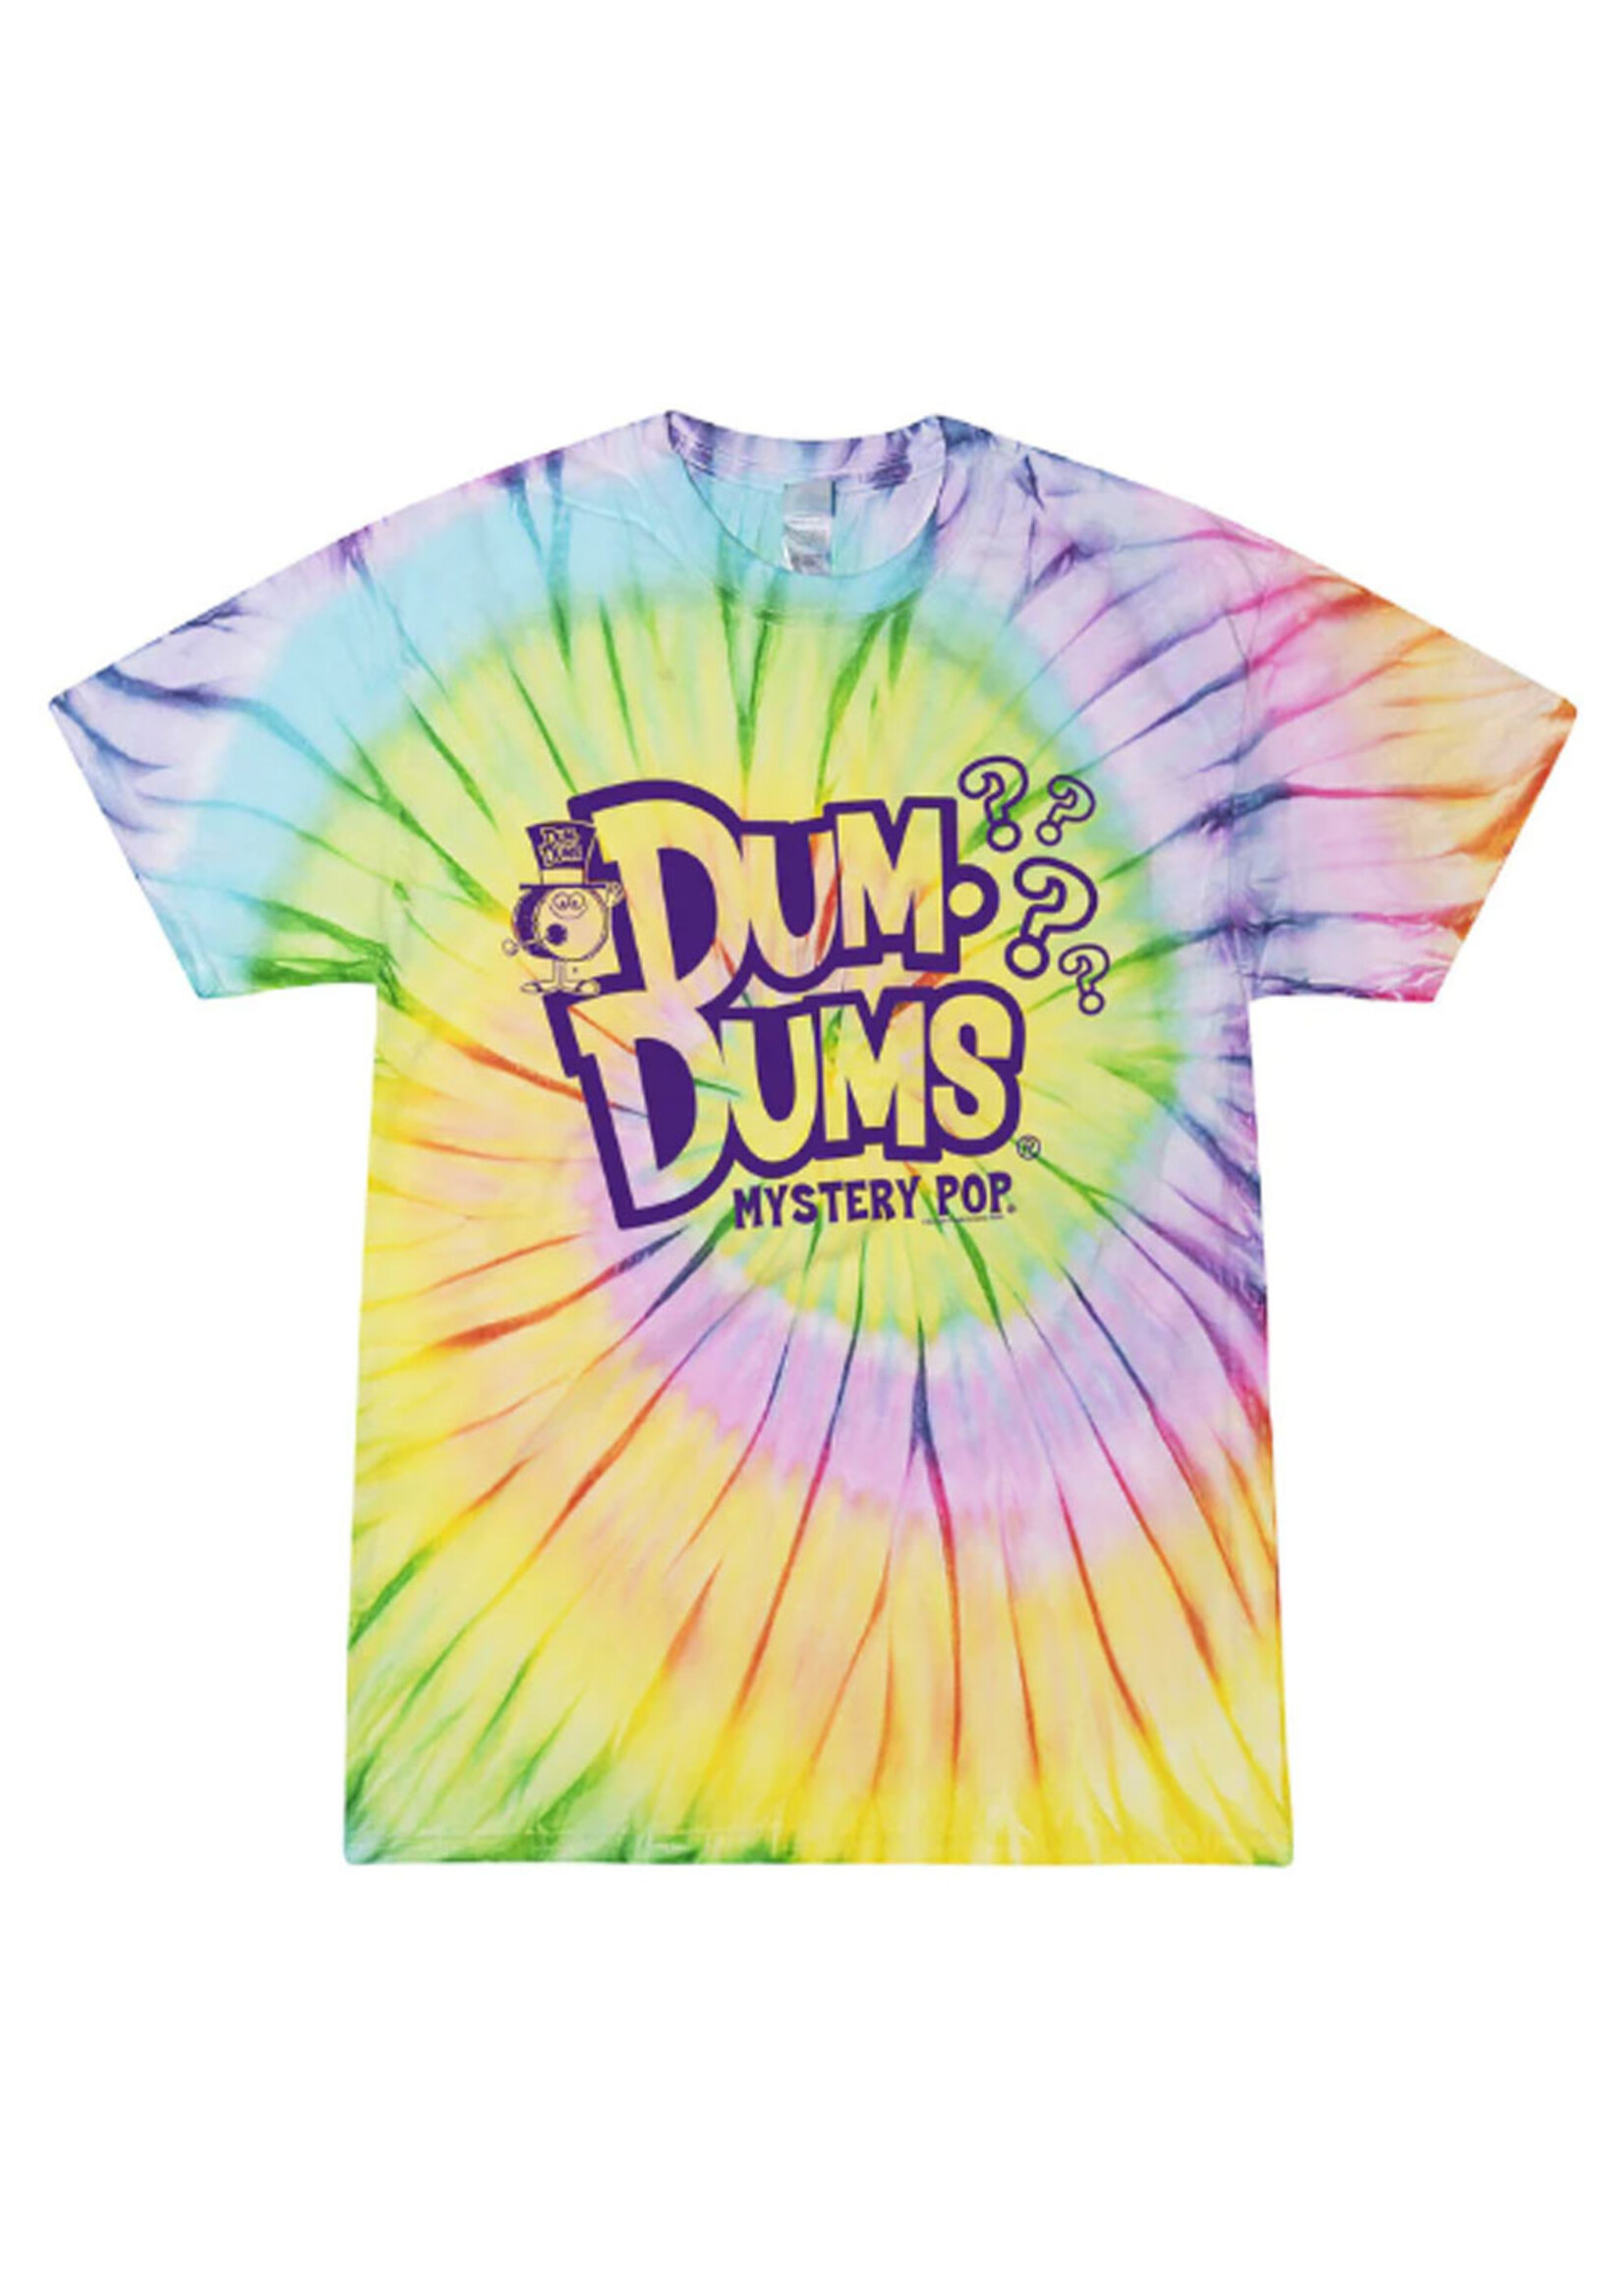 Sweet Memories Vintage Tees Dum-Dums ® Mystery Flavor Pop Unisex Tie-Dye Shirt | Est. in Ohio Shirt | Summer Tie-Dye